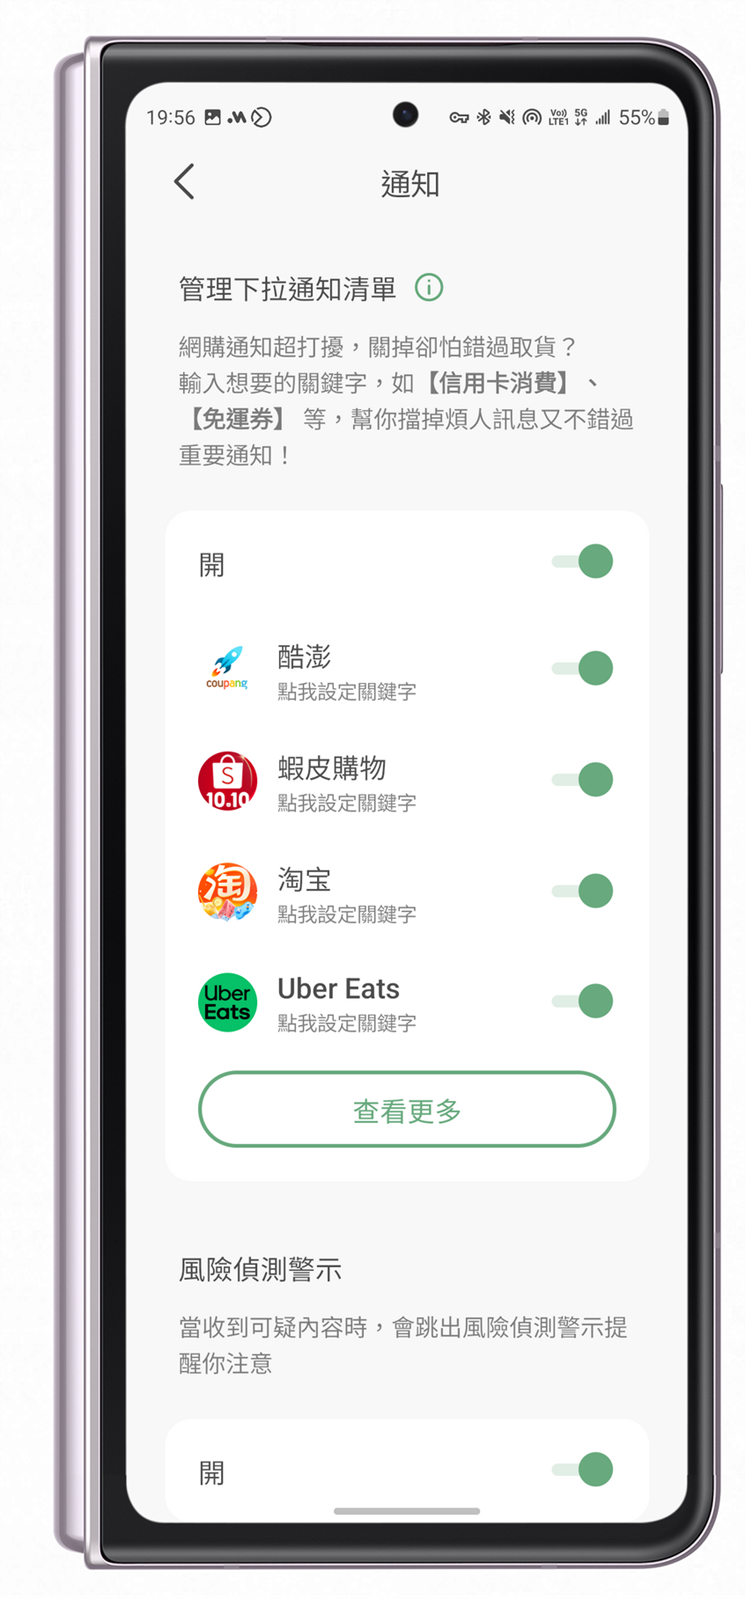 Android 限定 Gogolook Message Checker 最便利一站式訊息管理 App 還提供防詐風險偵測 @3C 達人廖阿輝